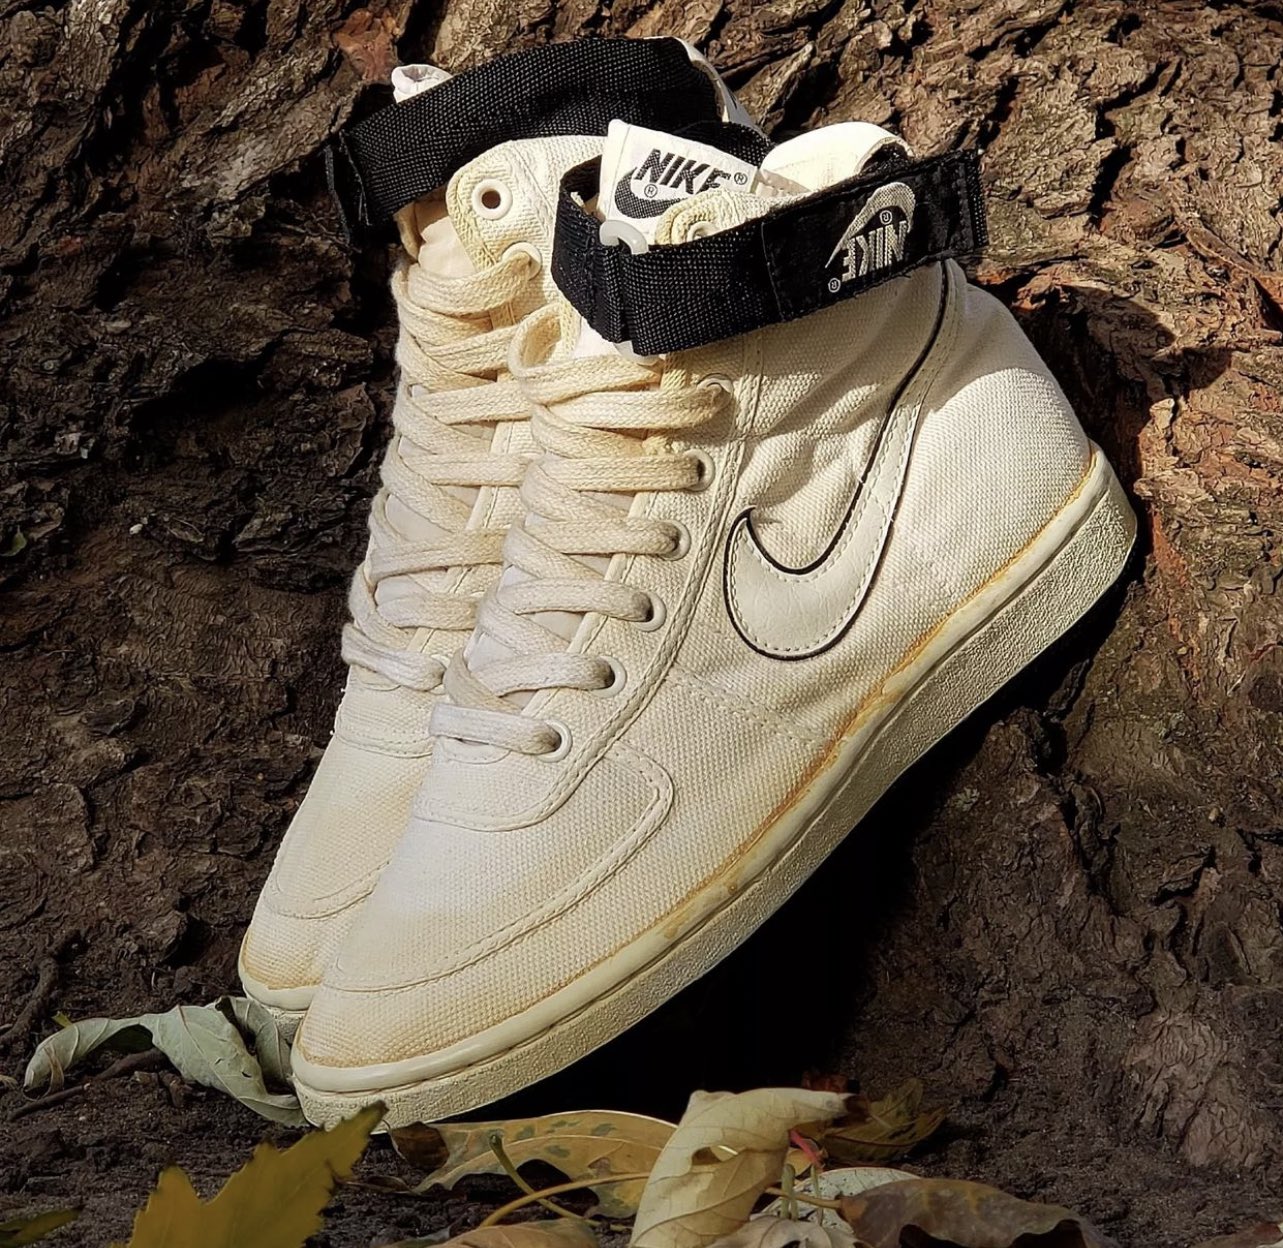 Nice Kicks on "'85 Nike Vandal Vintage 🎞 https://t.co/osbFSUtNhM" / Twitter